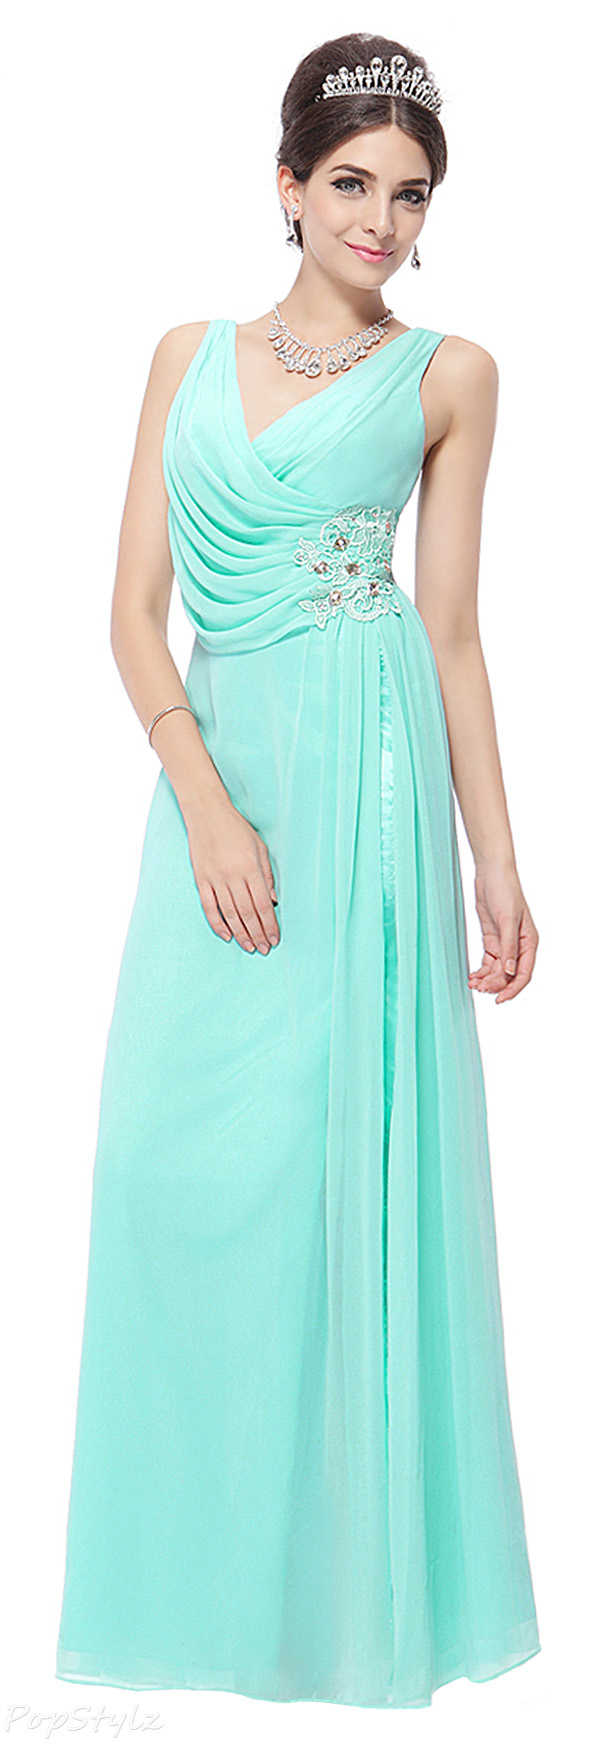 Ever Pretty 09963 Rhinestones Applique Evening Gown